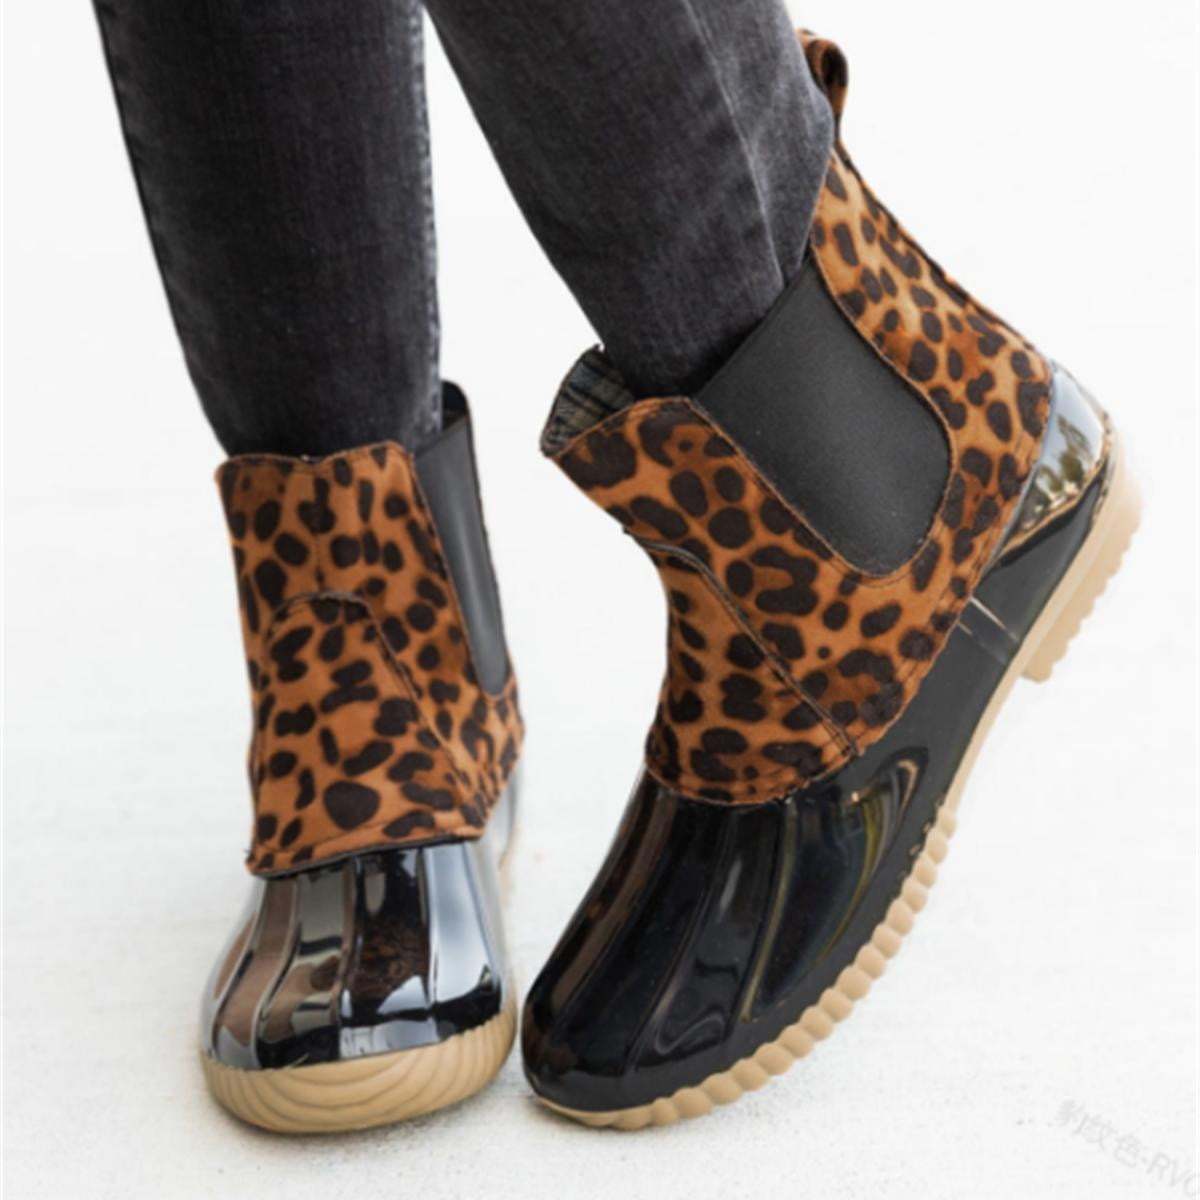 Leopard Size 5-11 New Women's Wellies Flat Snow & Rain Boots Rainboots 